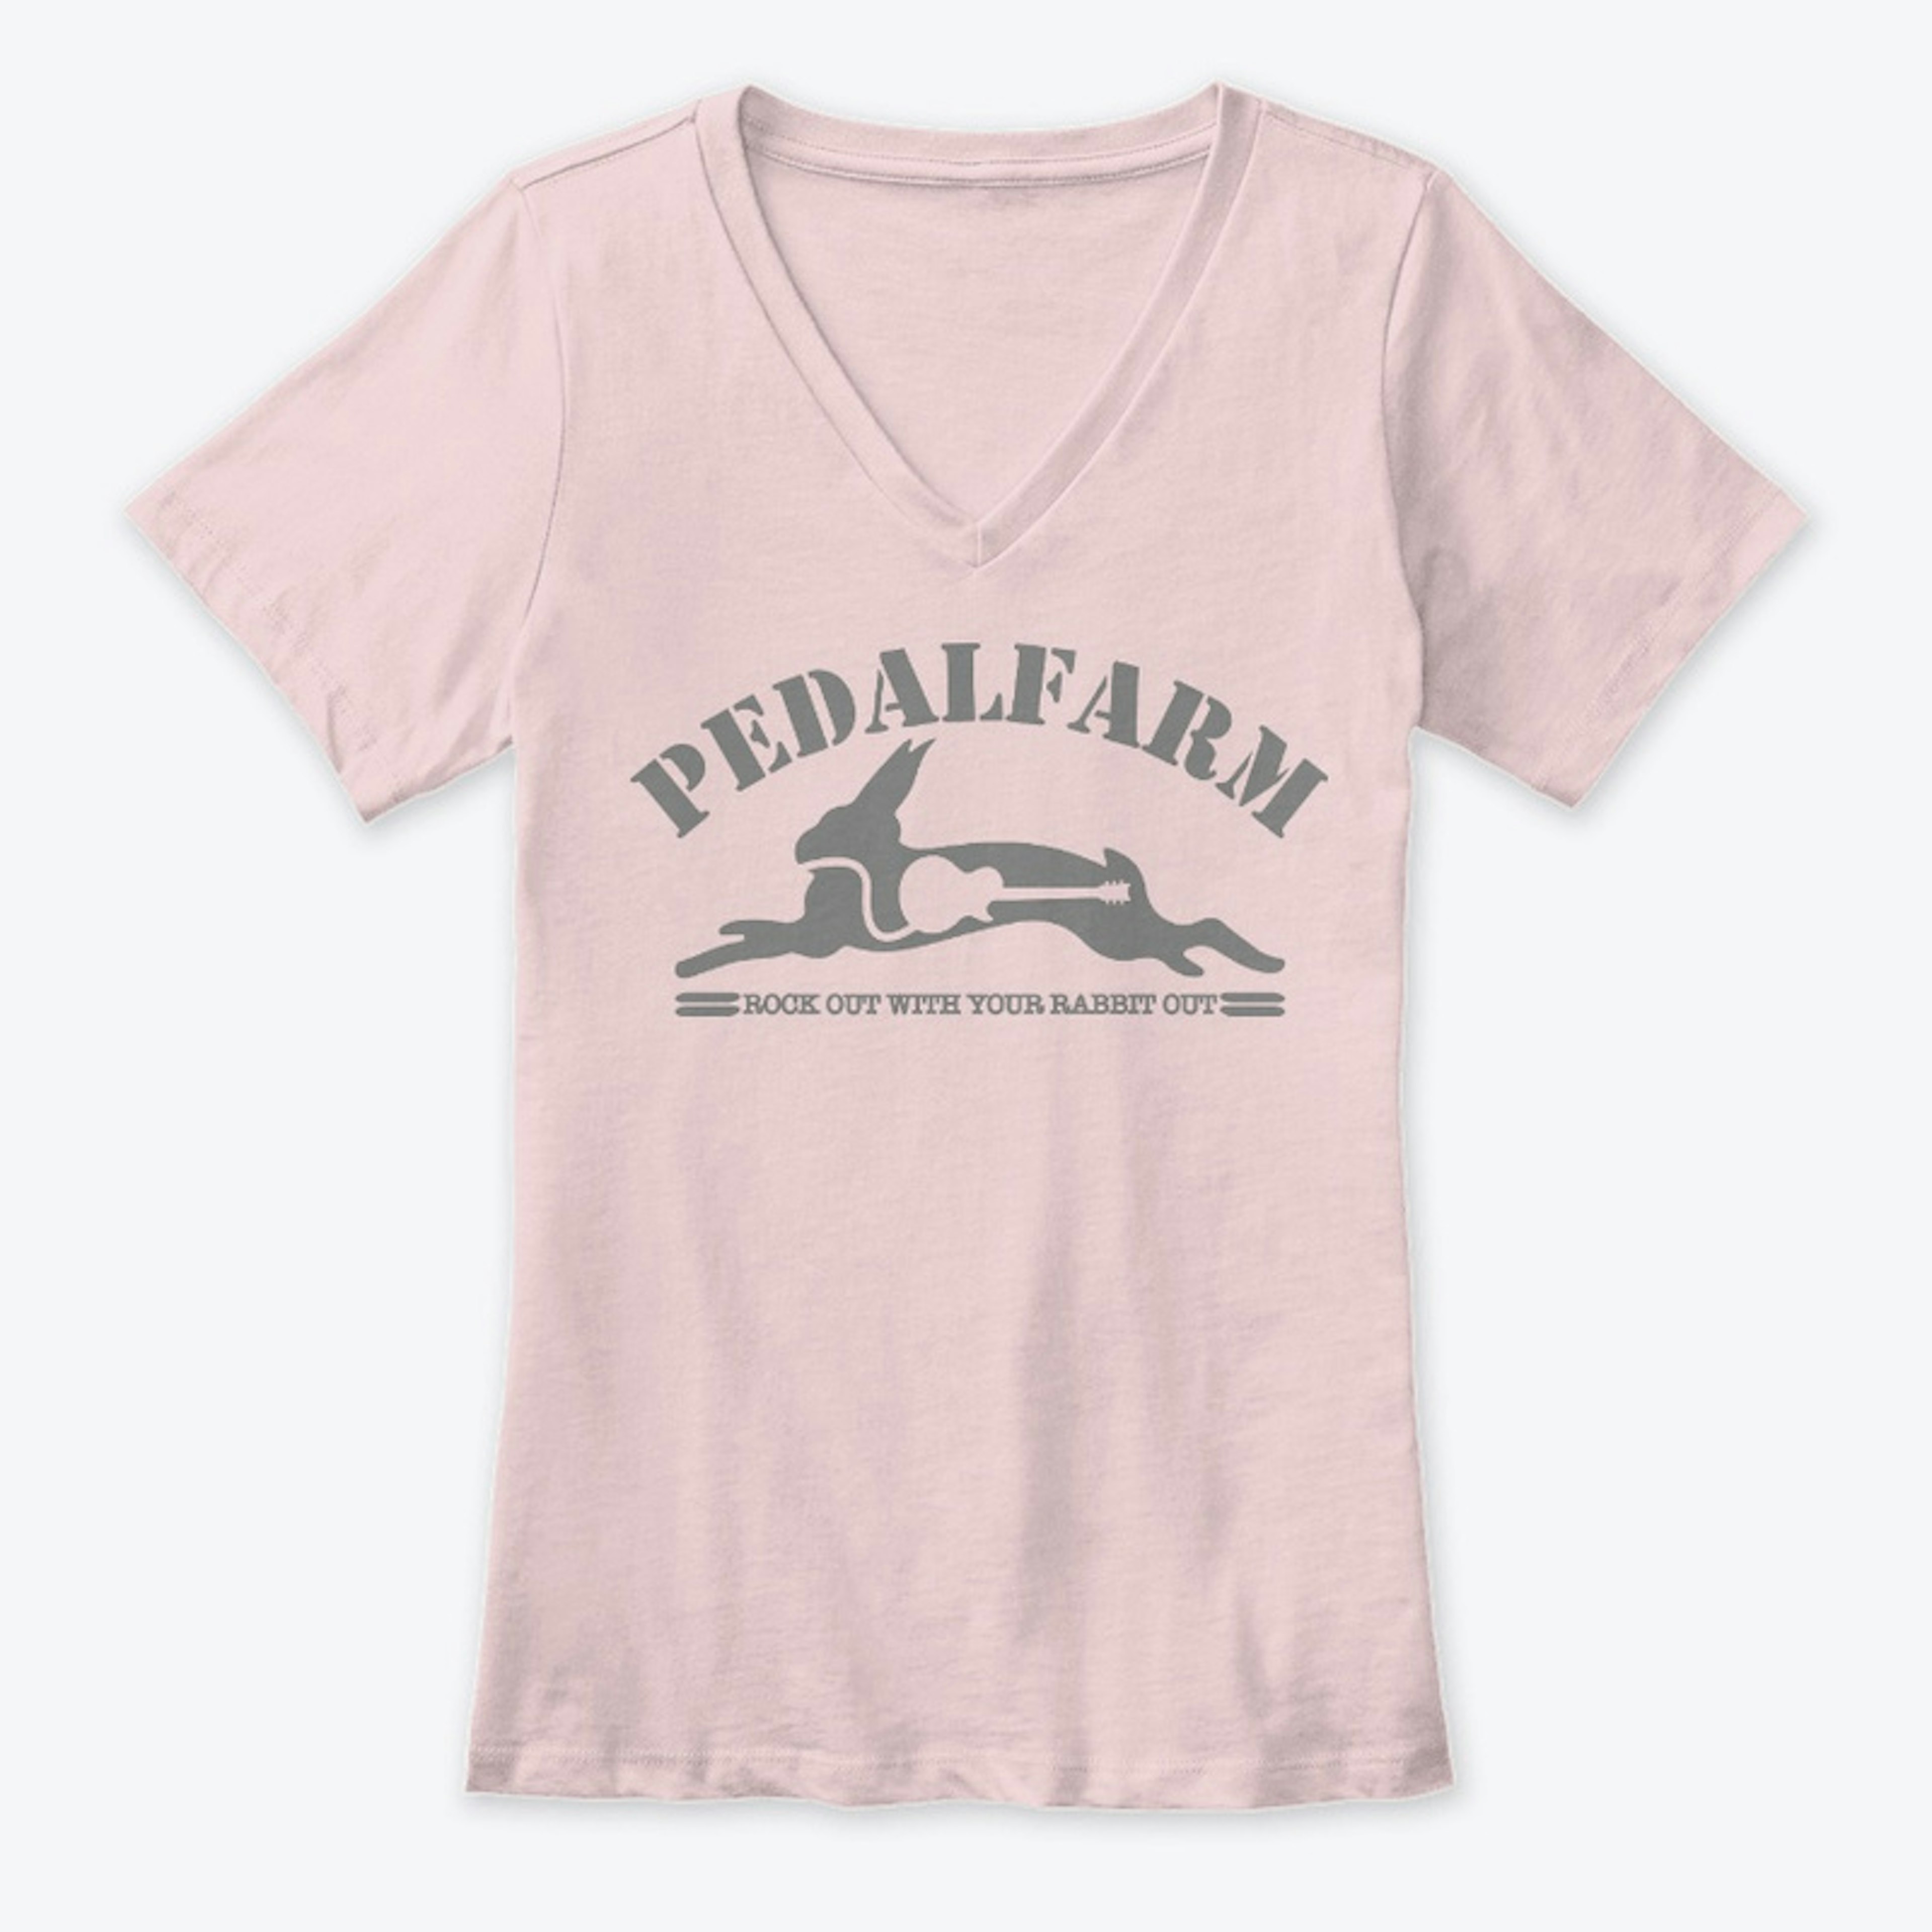 PedalFarm Woman's Rabbit Logo Tee